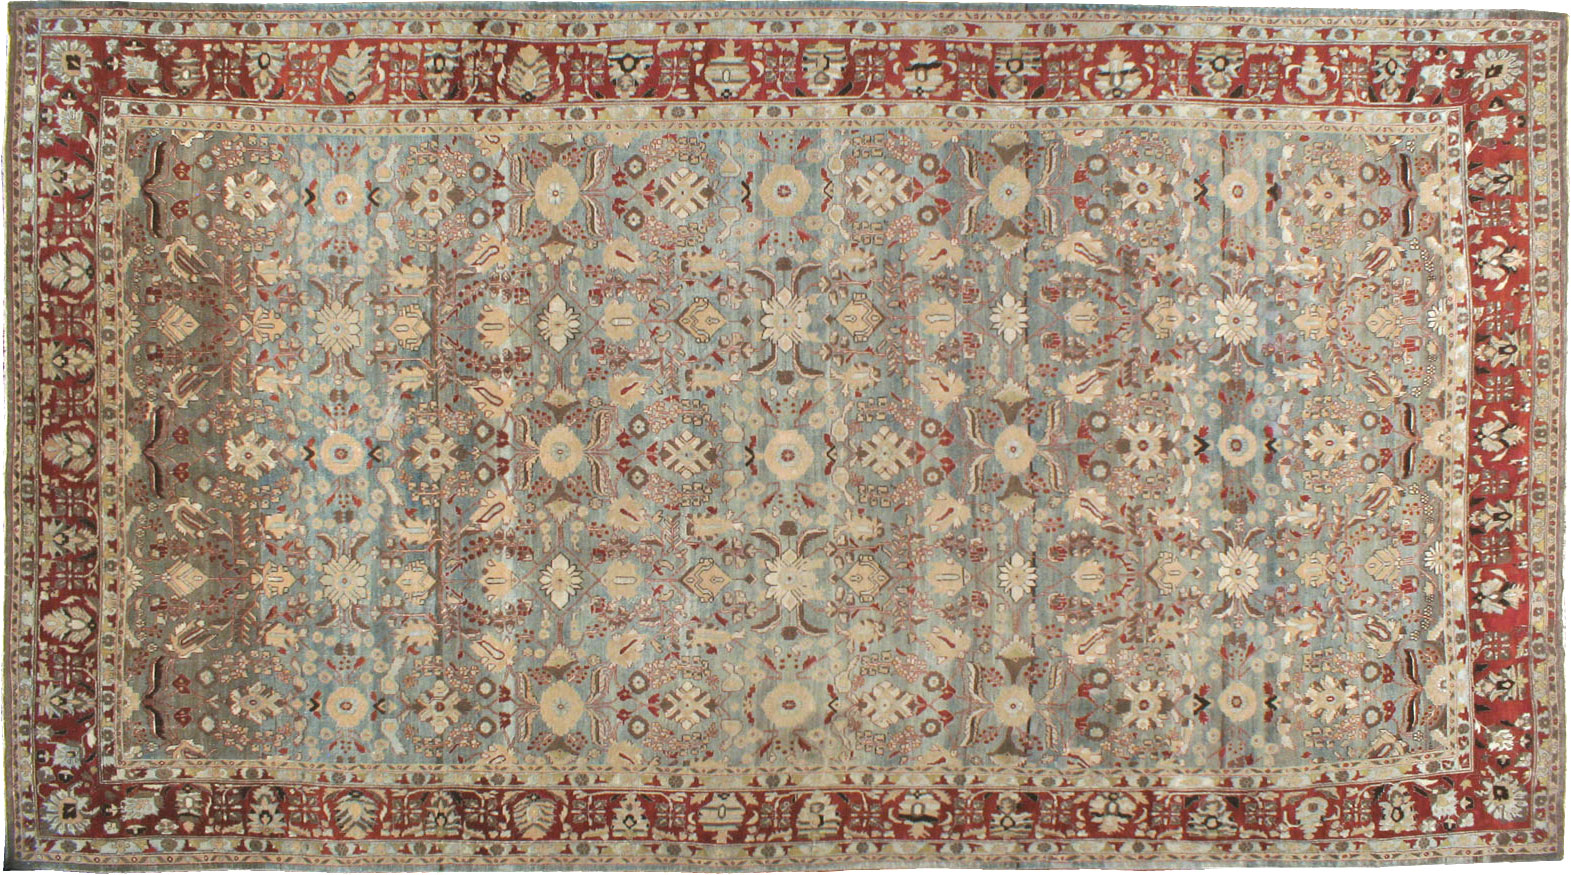 Antique malayer Carpet - # 53481